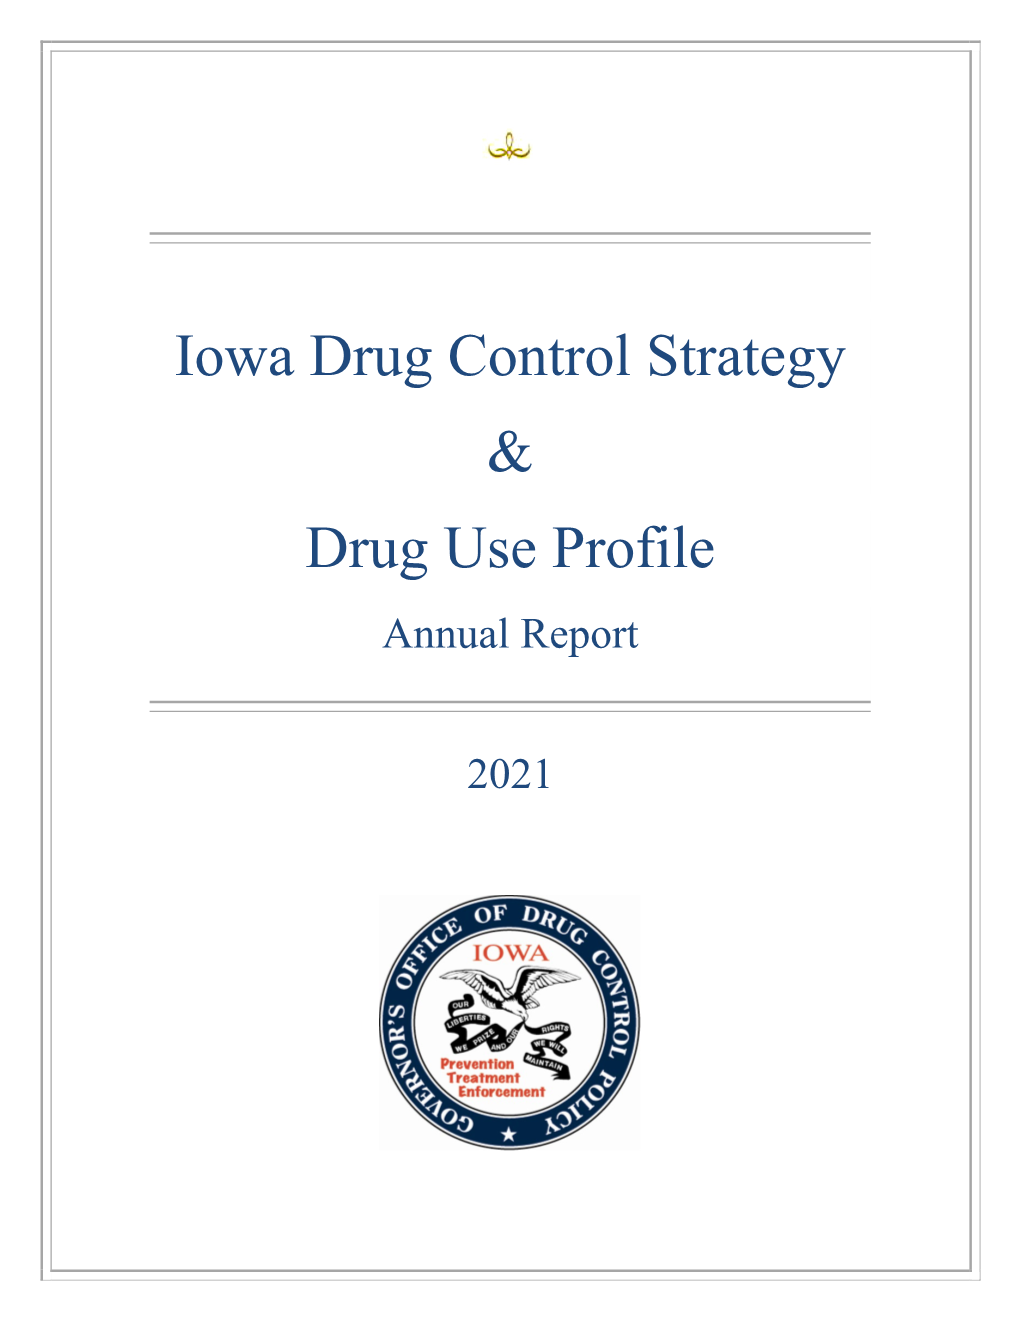 Iowa Drug Control Strategy & Drug Use Profile